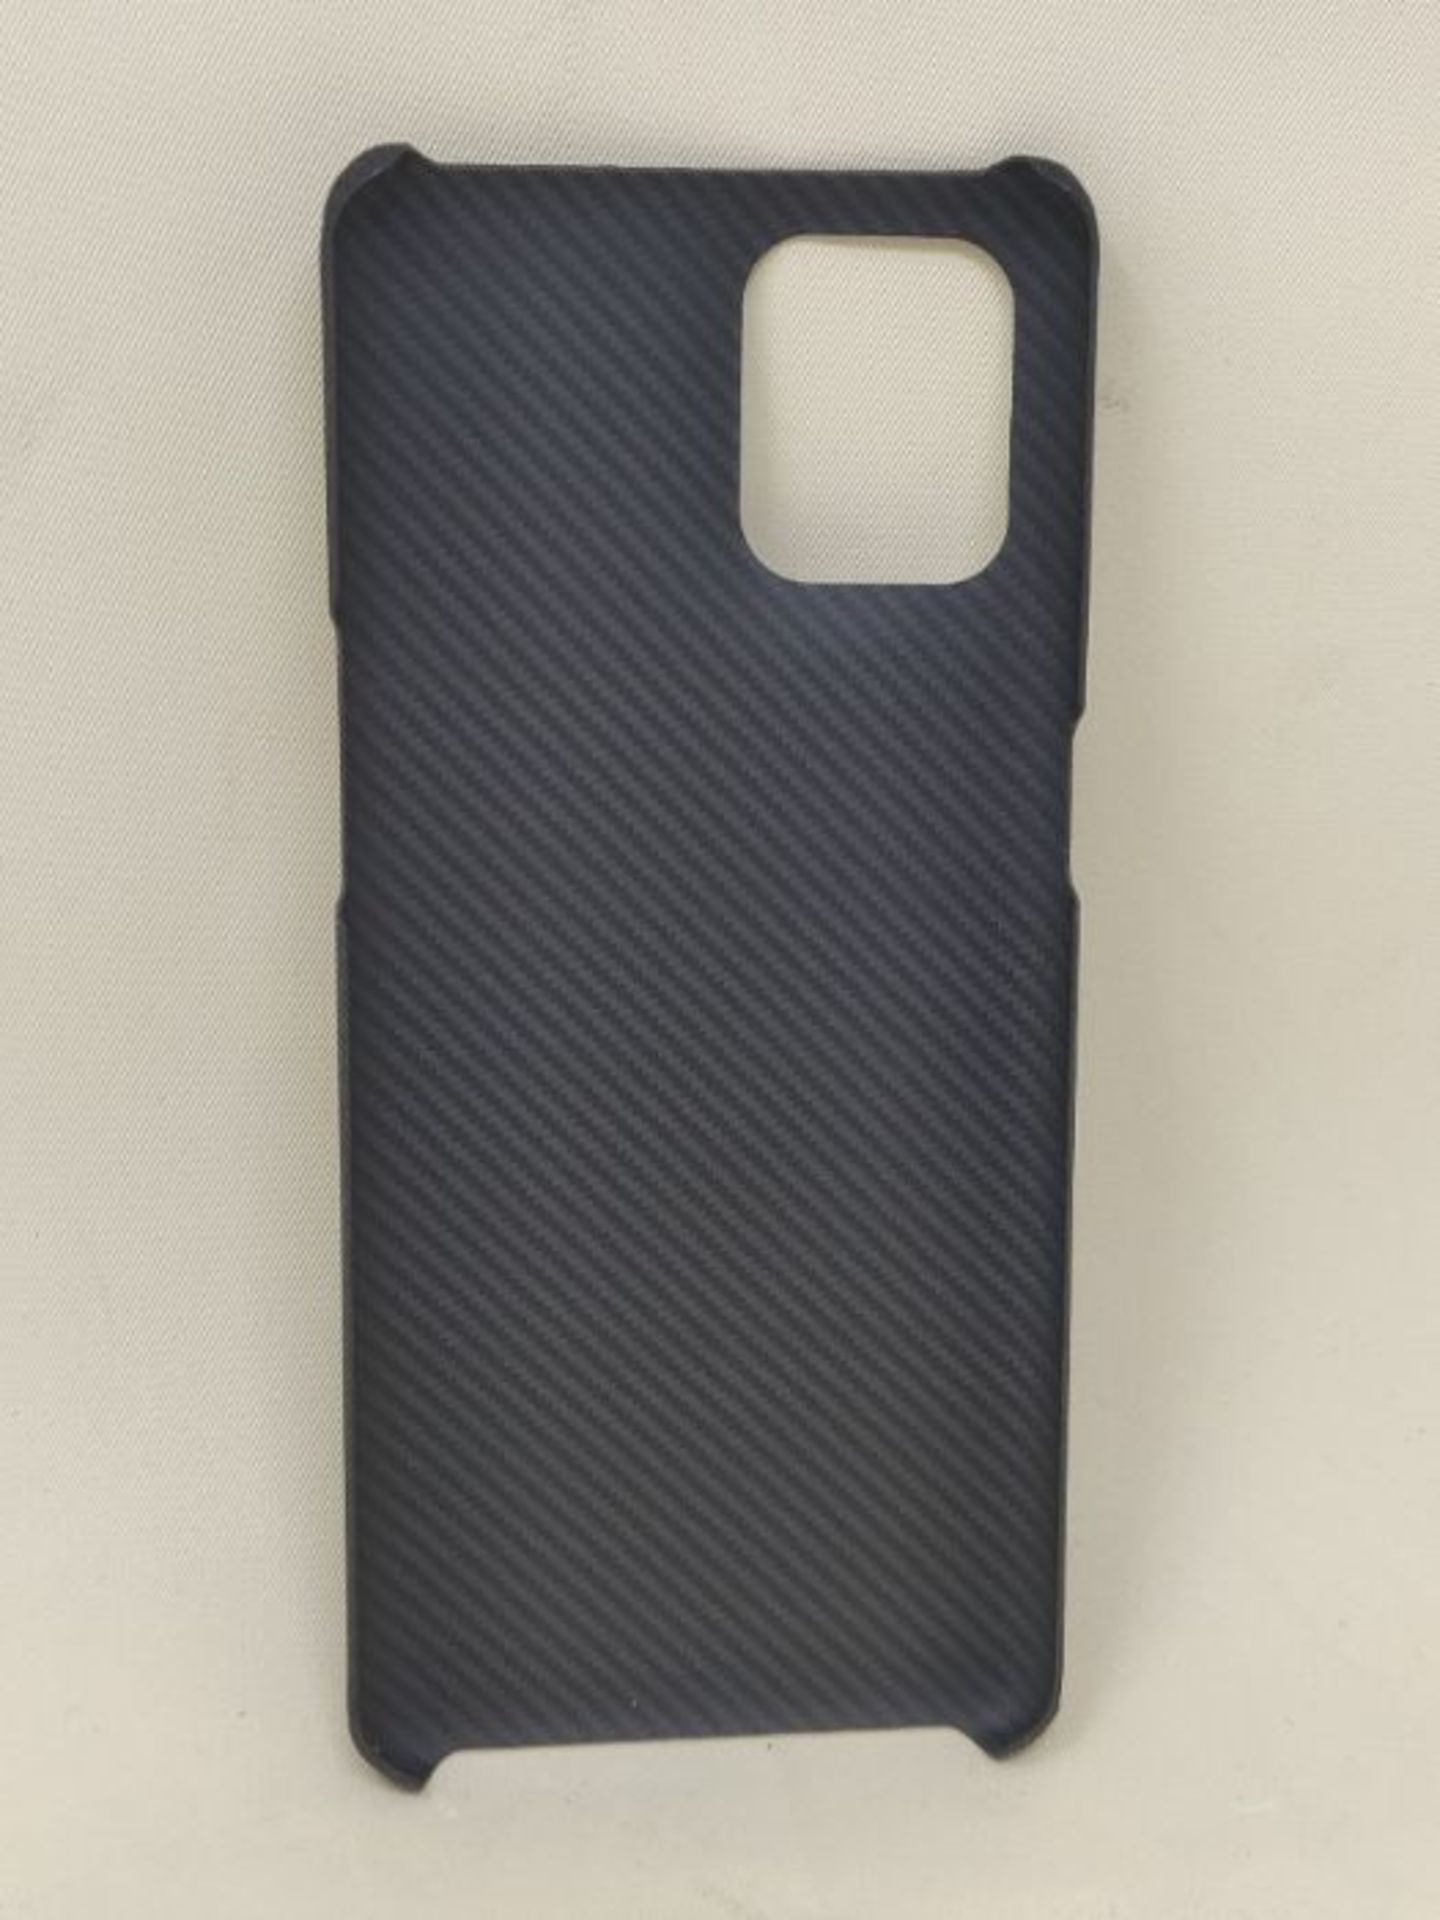 OPPO Find X3 Pro Kevlar Aramid Case - Black - Image 2 of 2